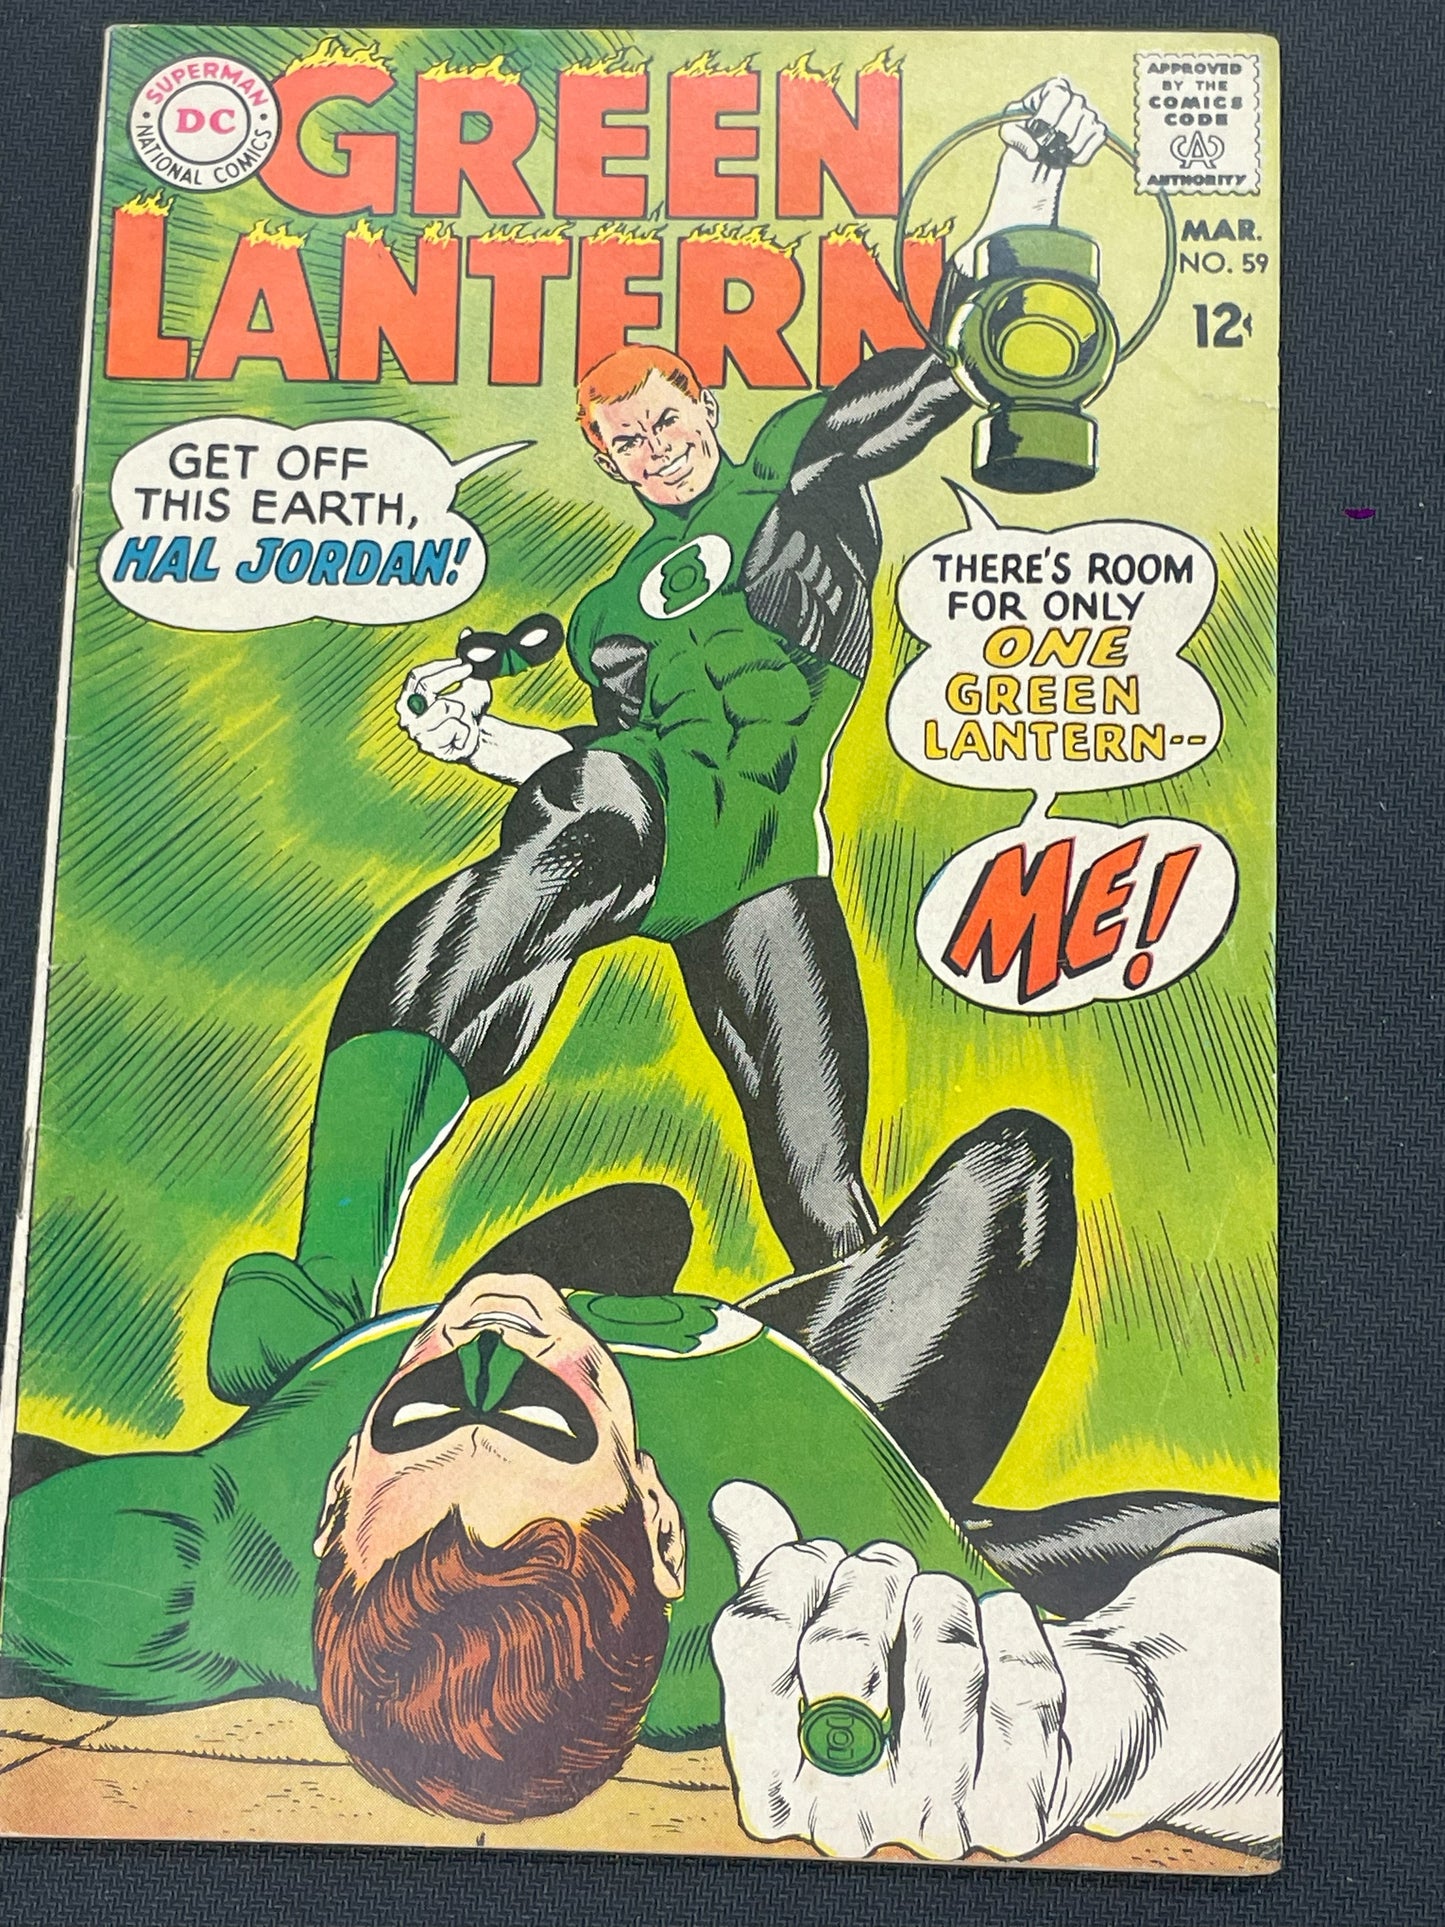 Green Lantern 59- SOLD ON EBAY, DO NOT SELL